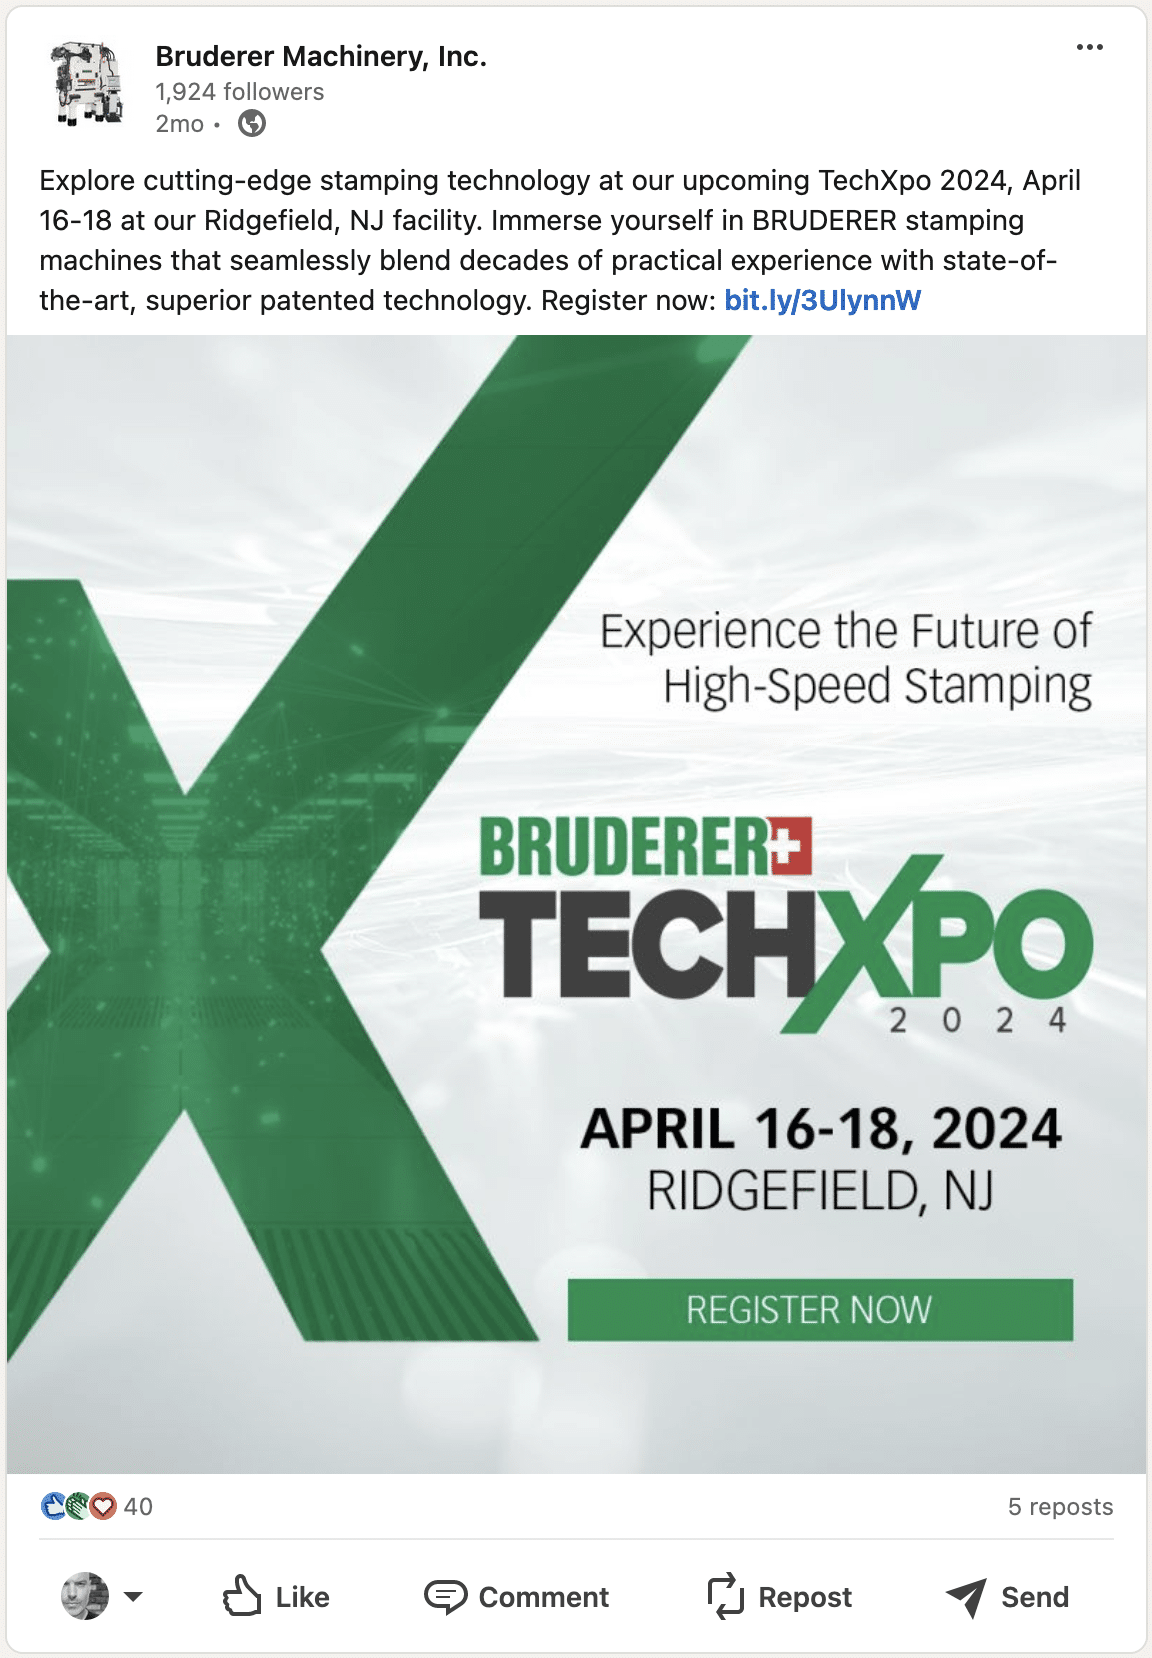 Bruderer Americas TechXpo 2024 LinkedIn Static Ad